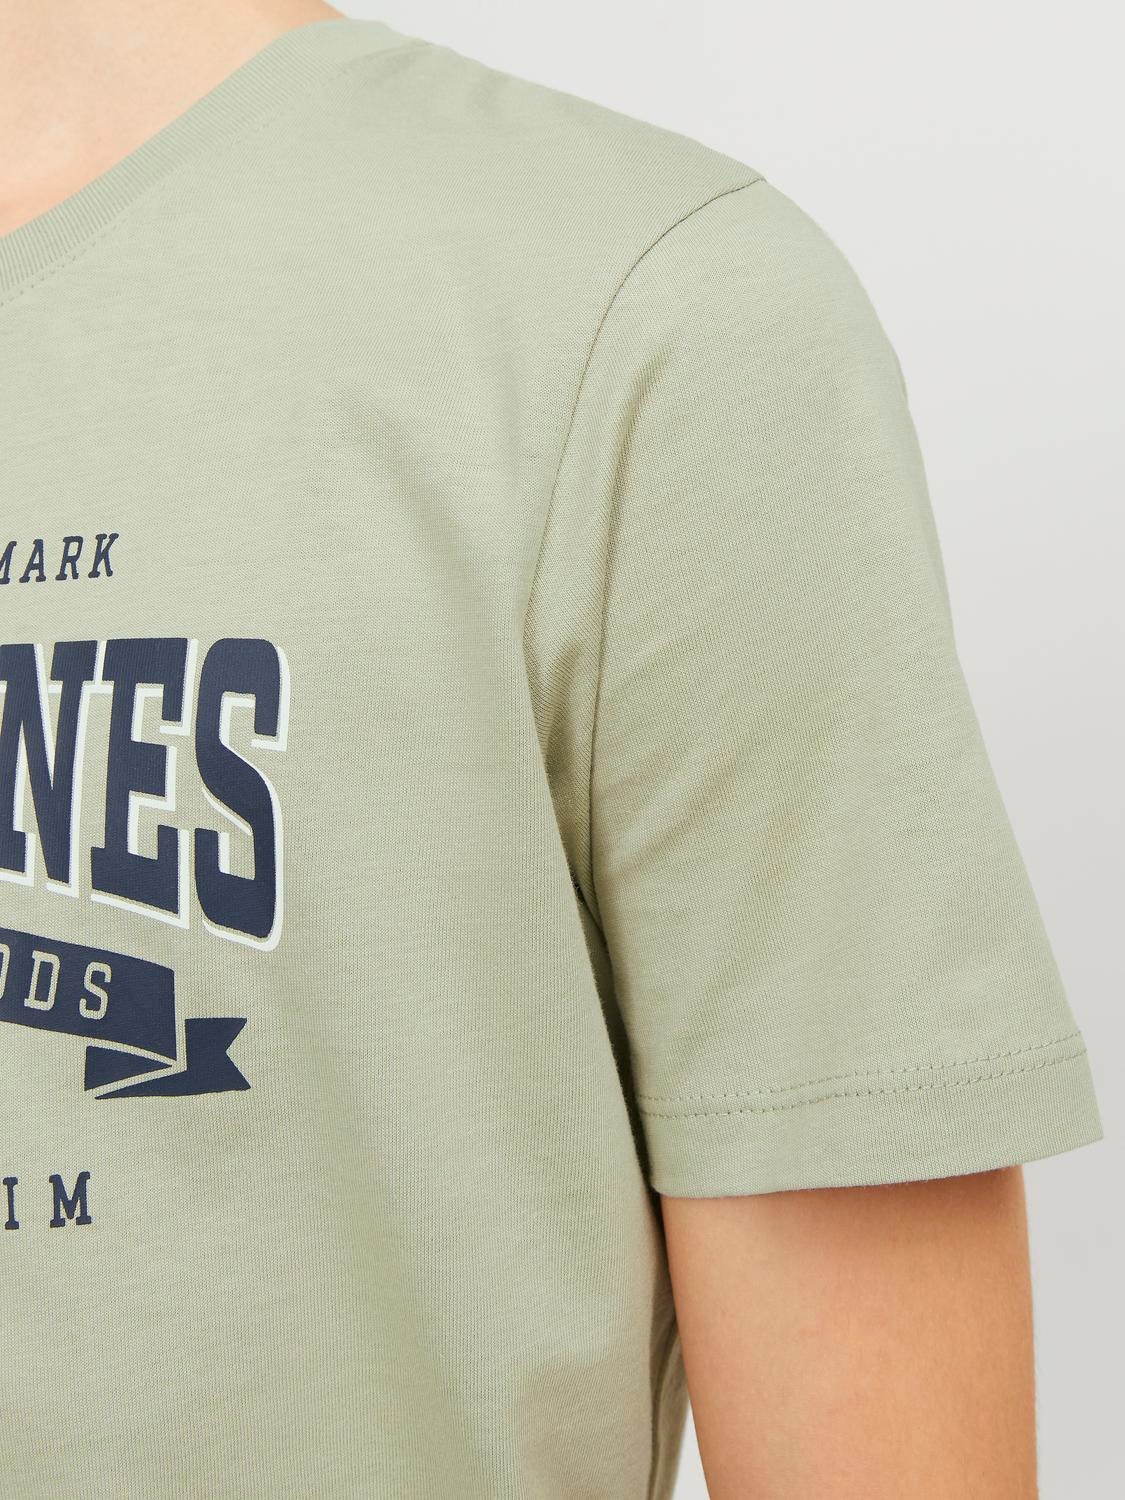 Jack & Jones Nadruk T-shirt Dla chłopców -Desert Sage - 12237367